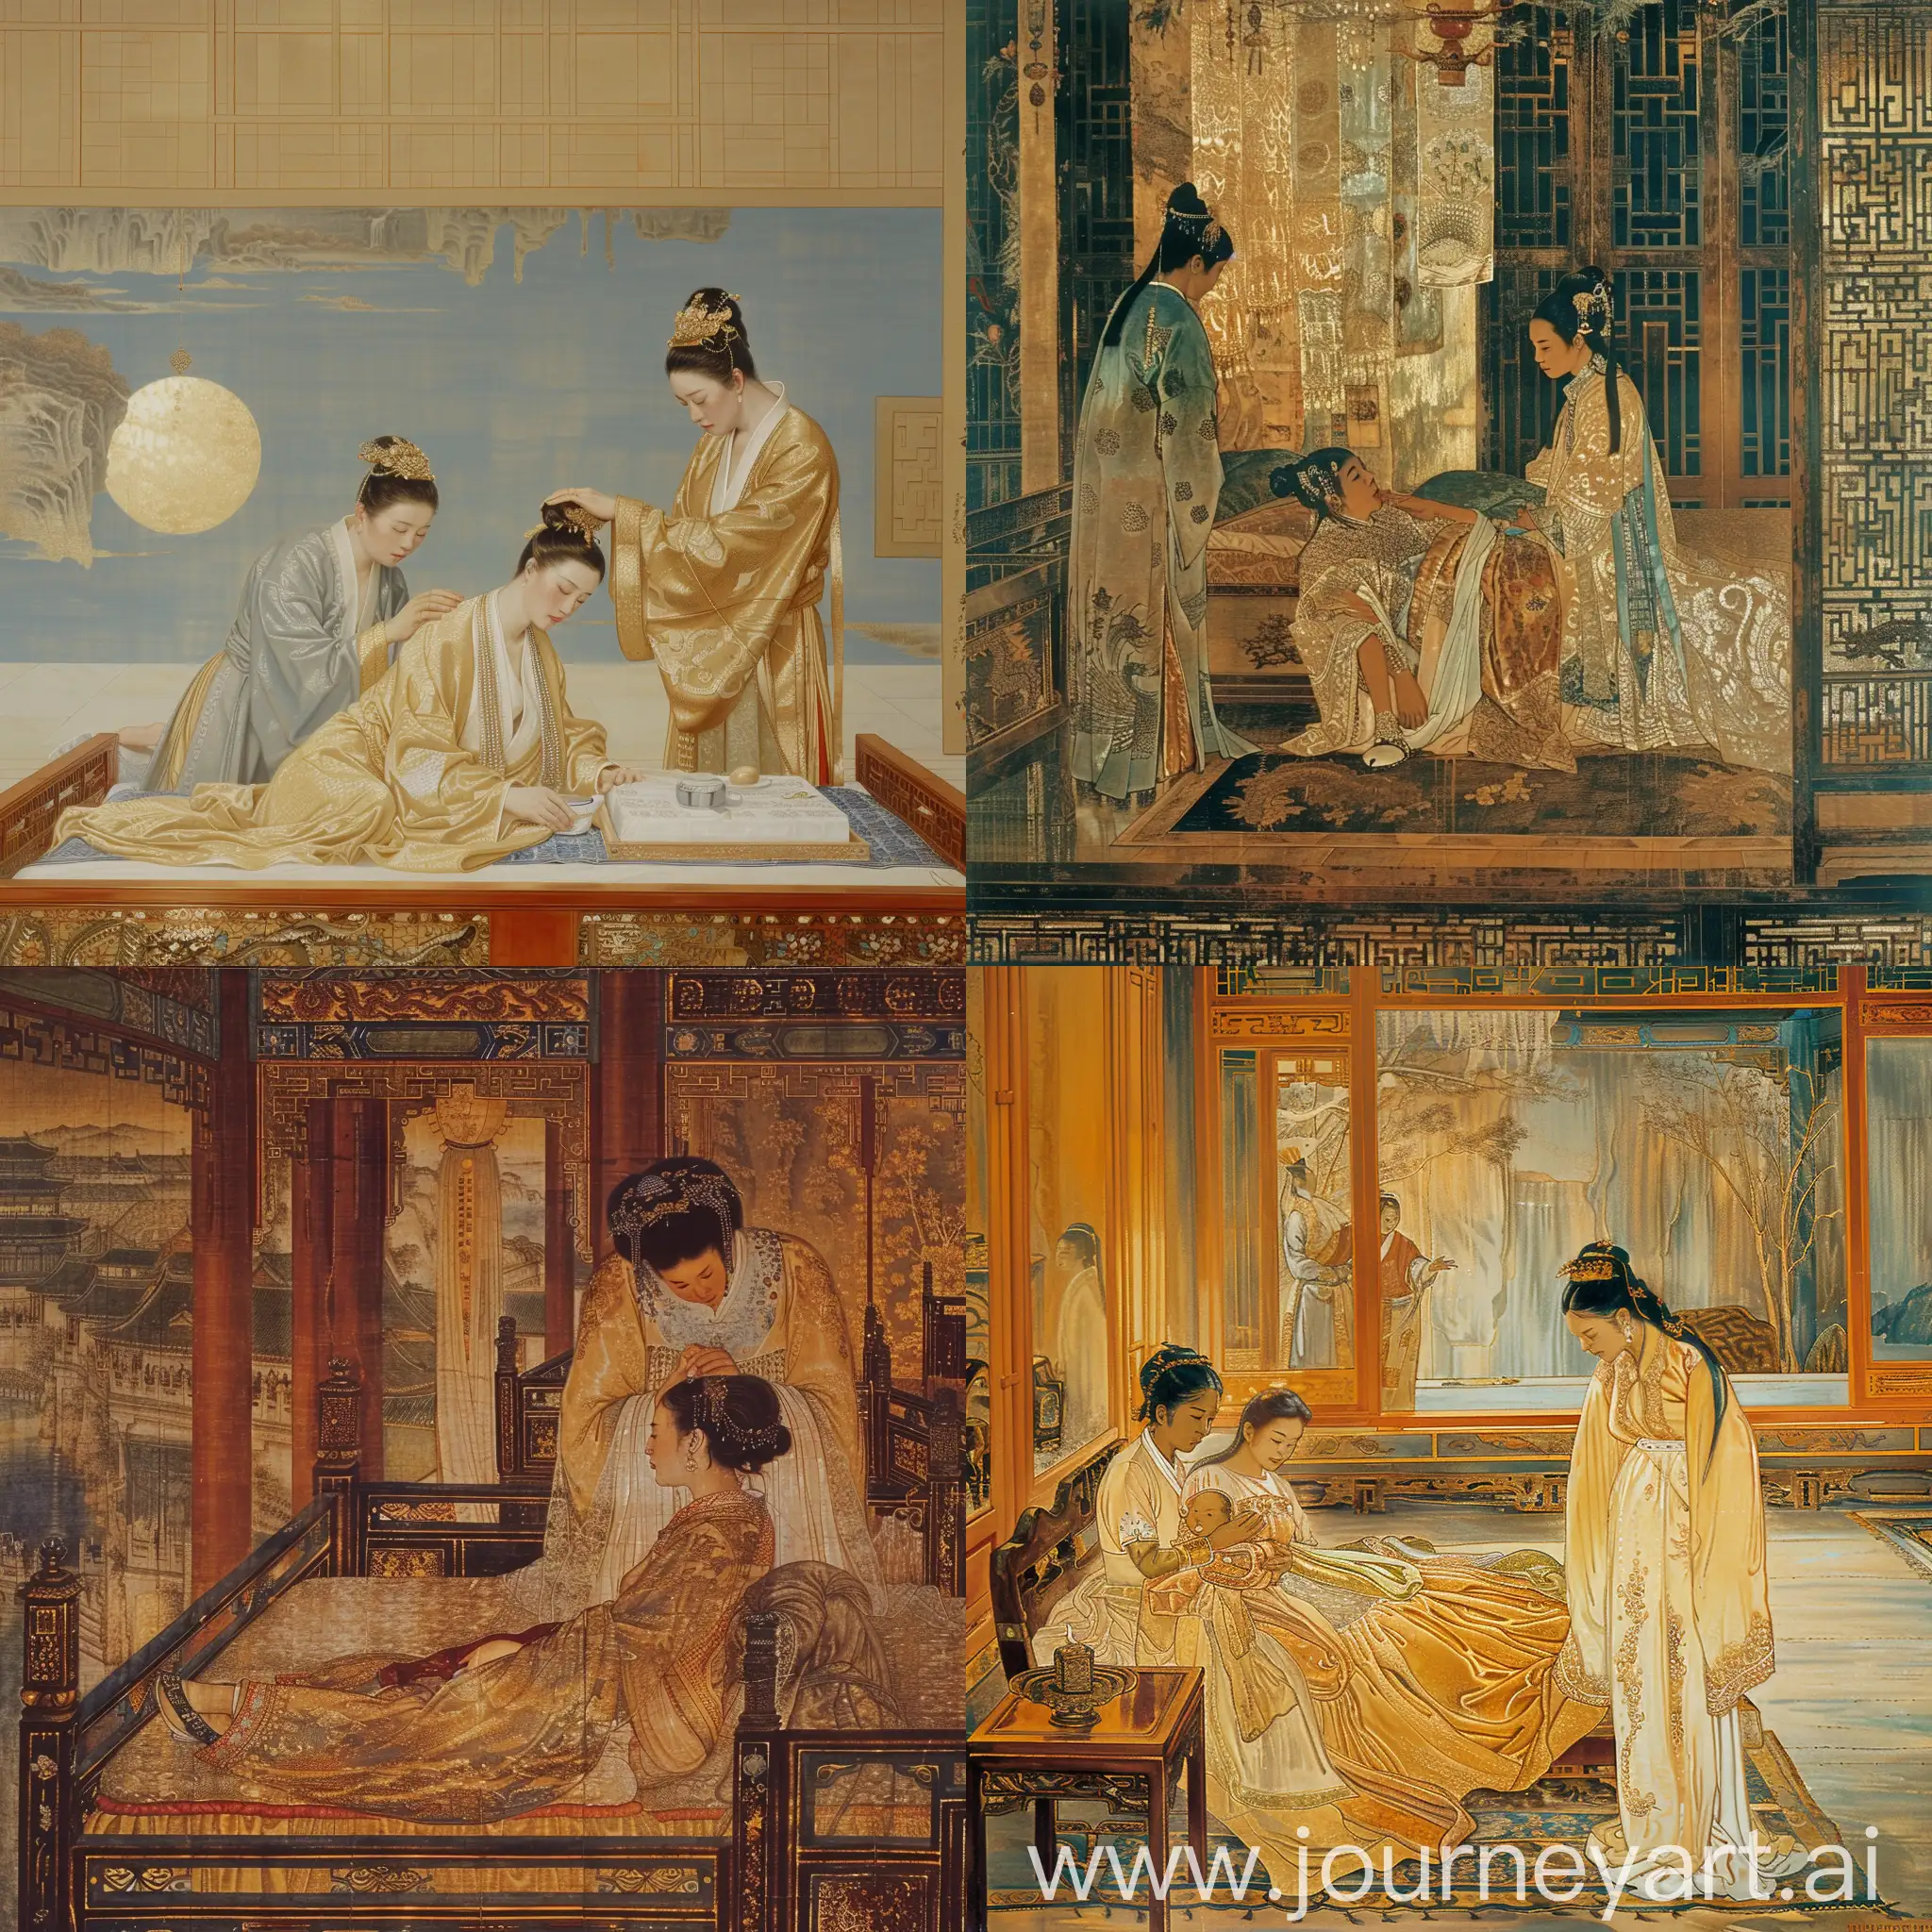 Morning-Ritual-of-Empress-Wu-Zetian-in-Hanfu-Robe-Palace-Splendor